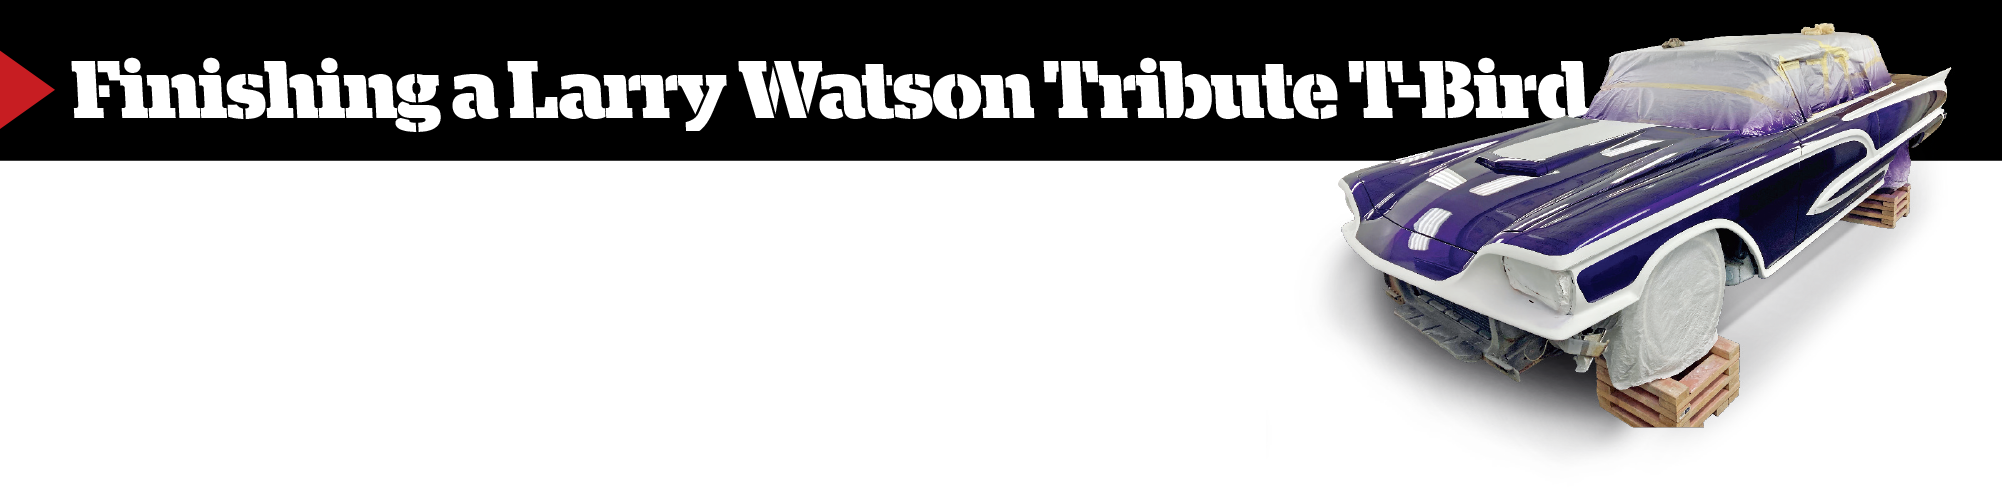 Finishing a Larry Watson Tribute T-Bird